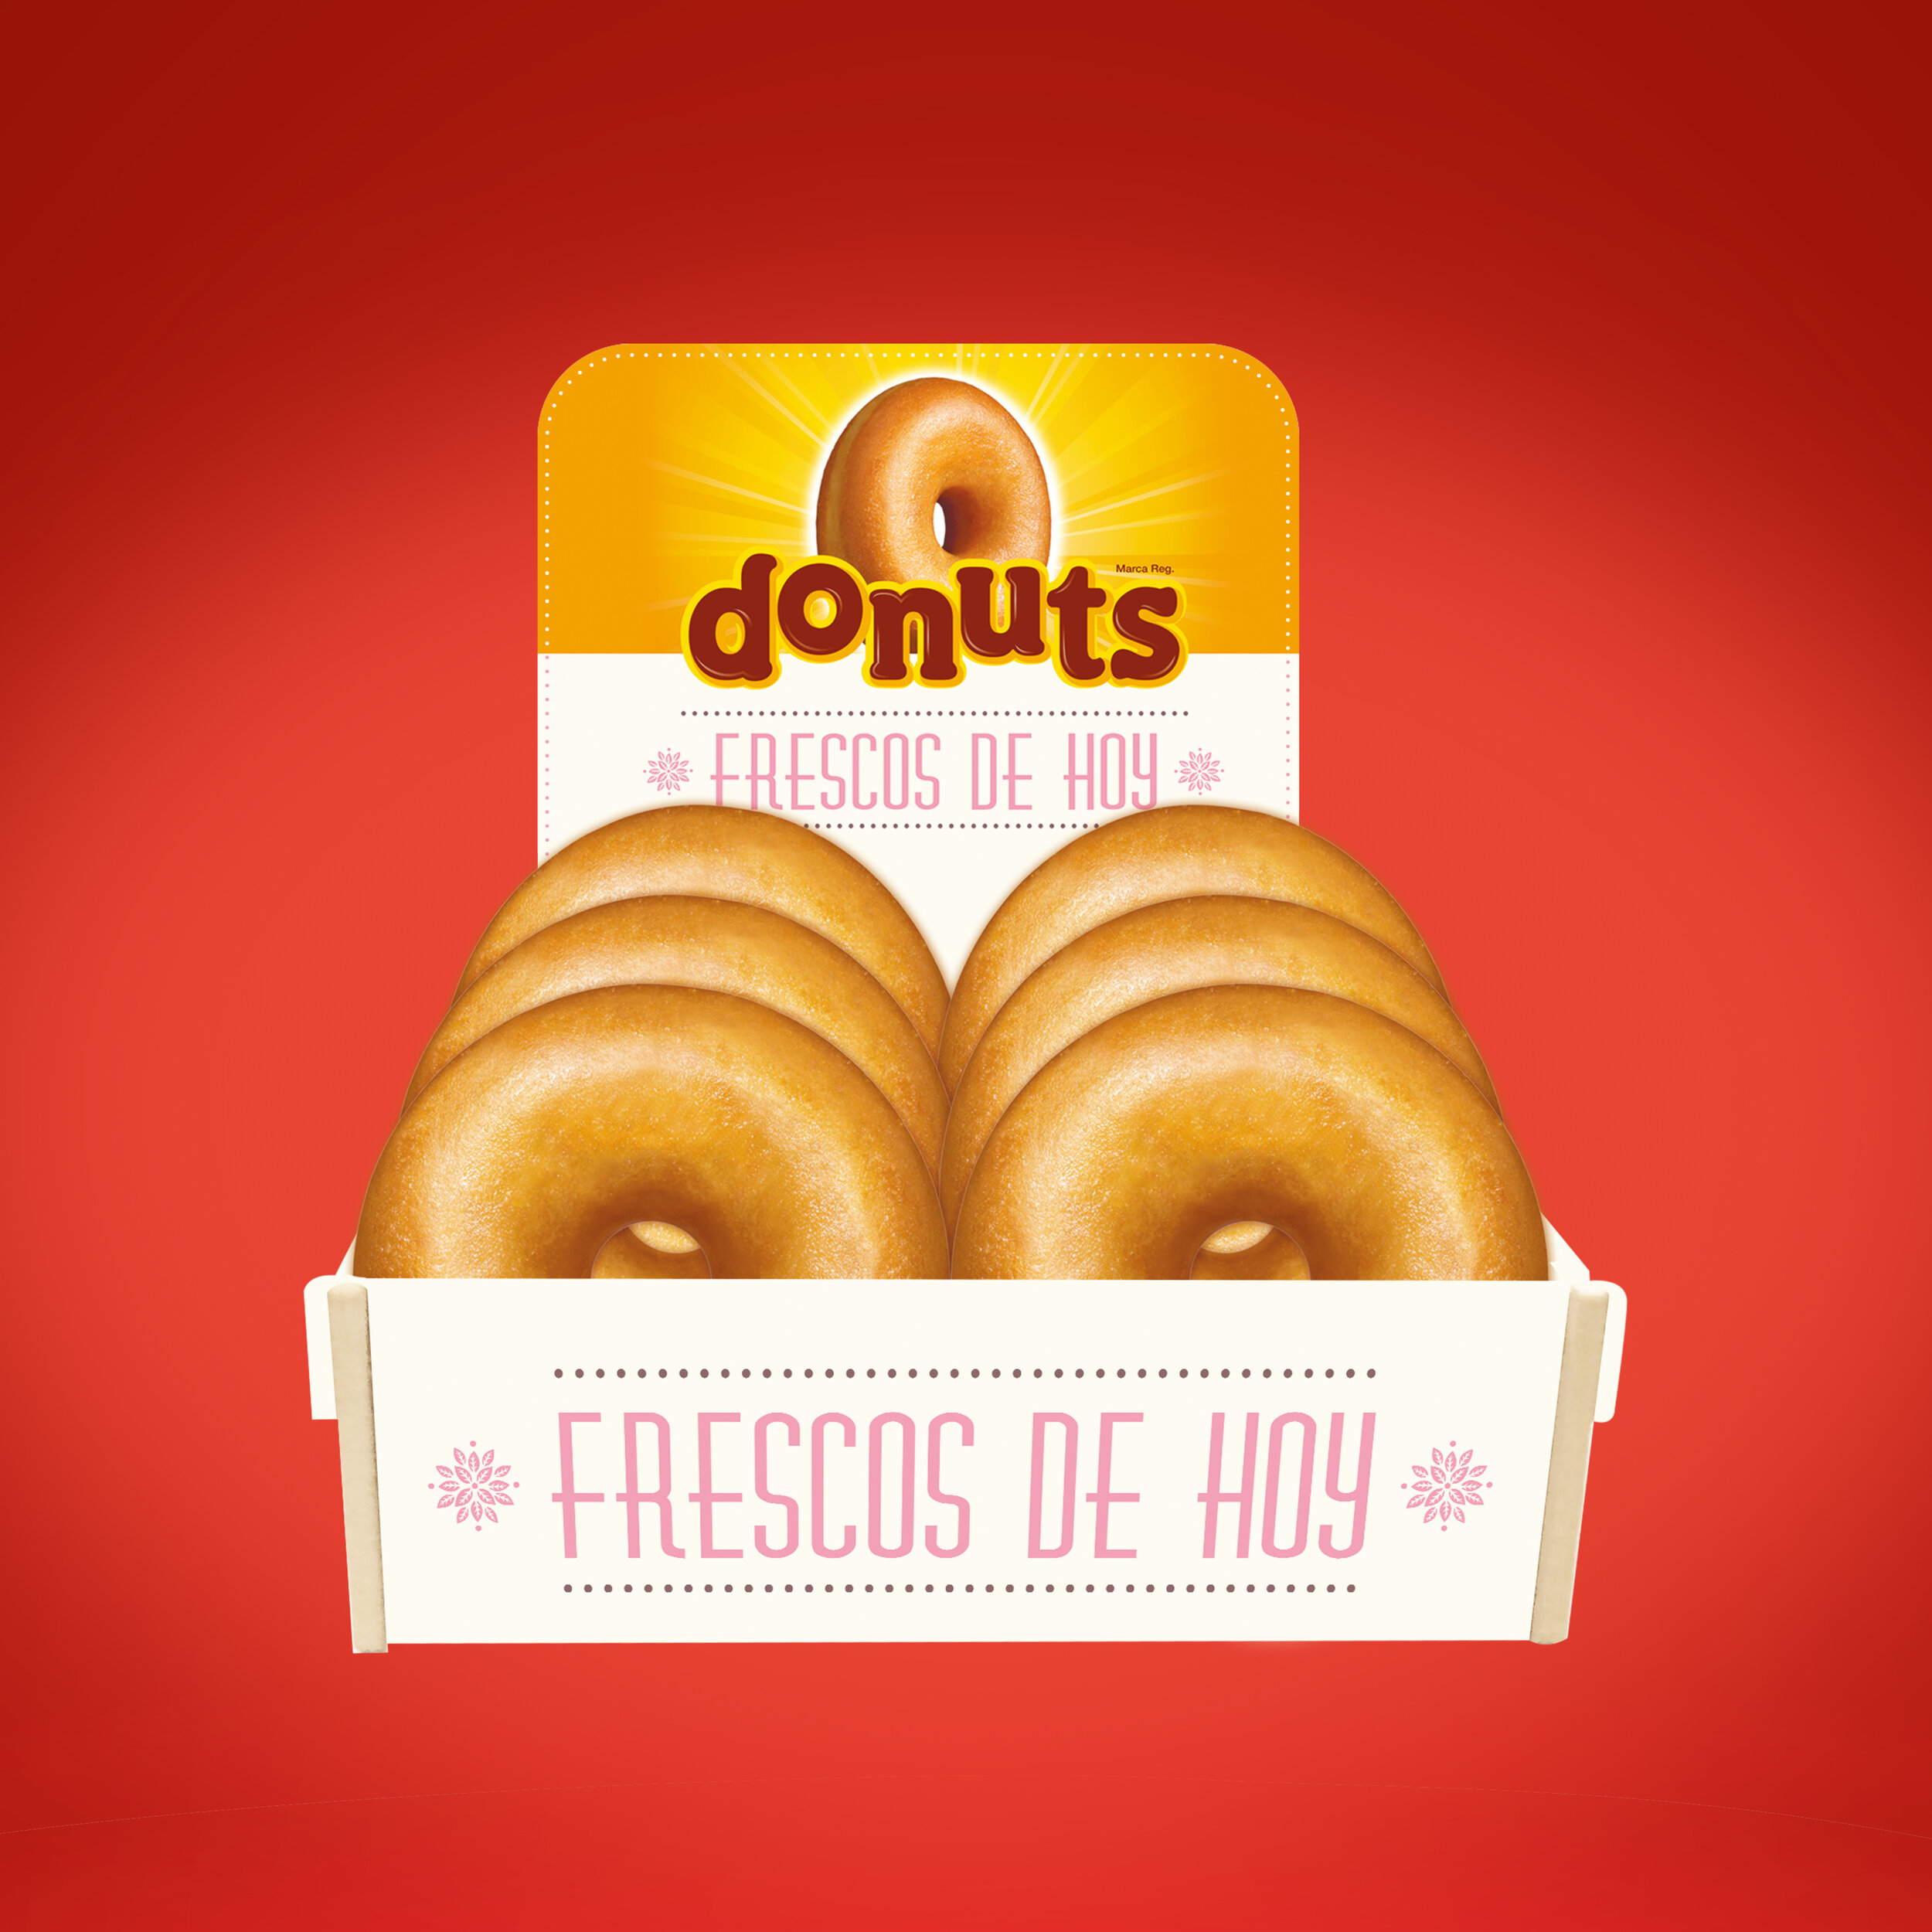 Donuts-Seleccion-del-dia_02.jpg